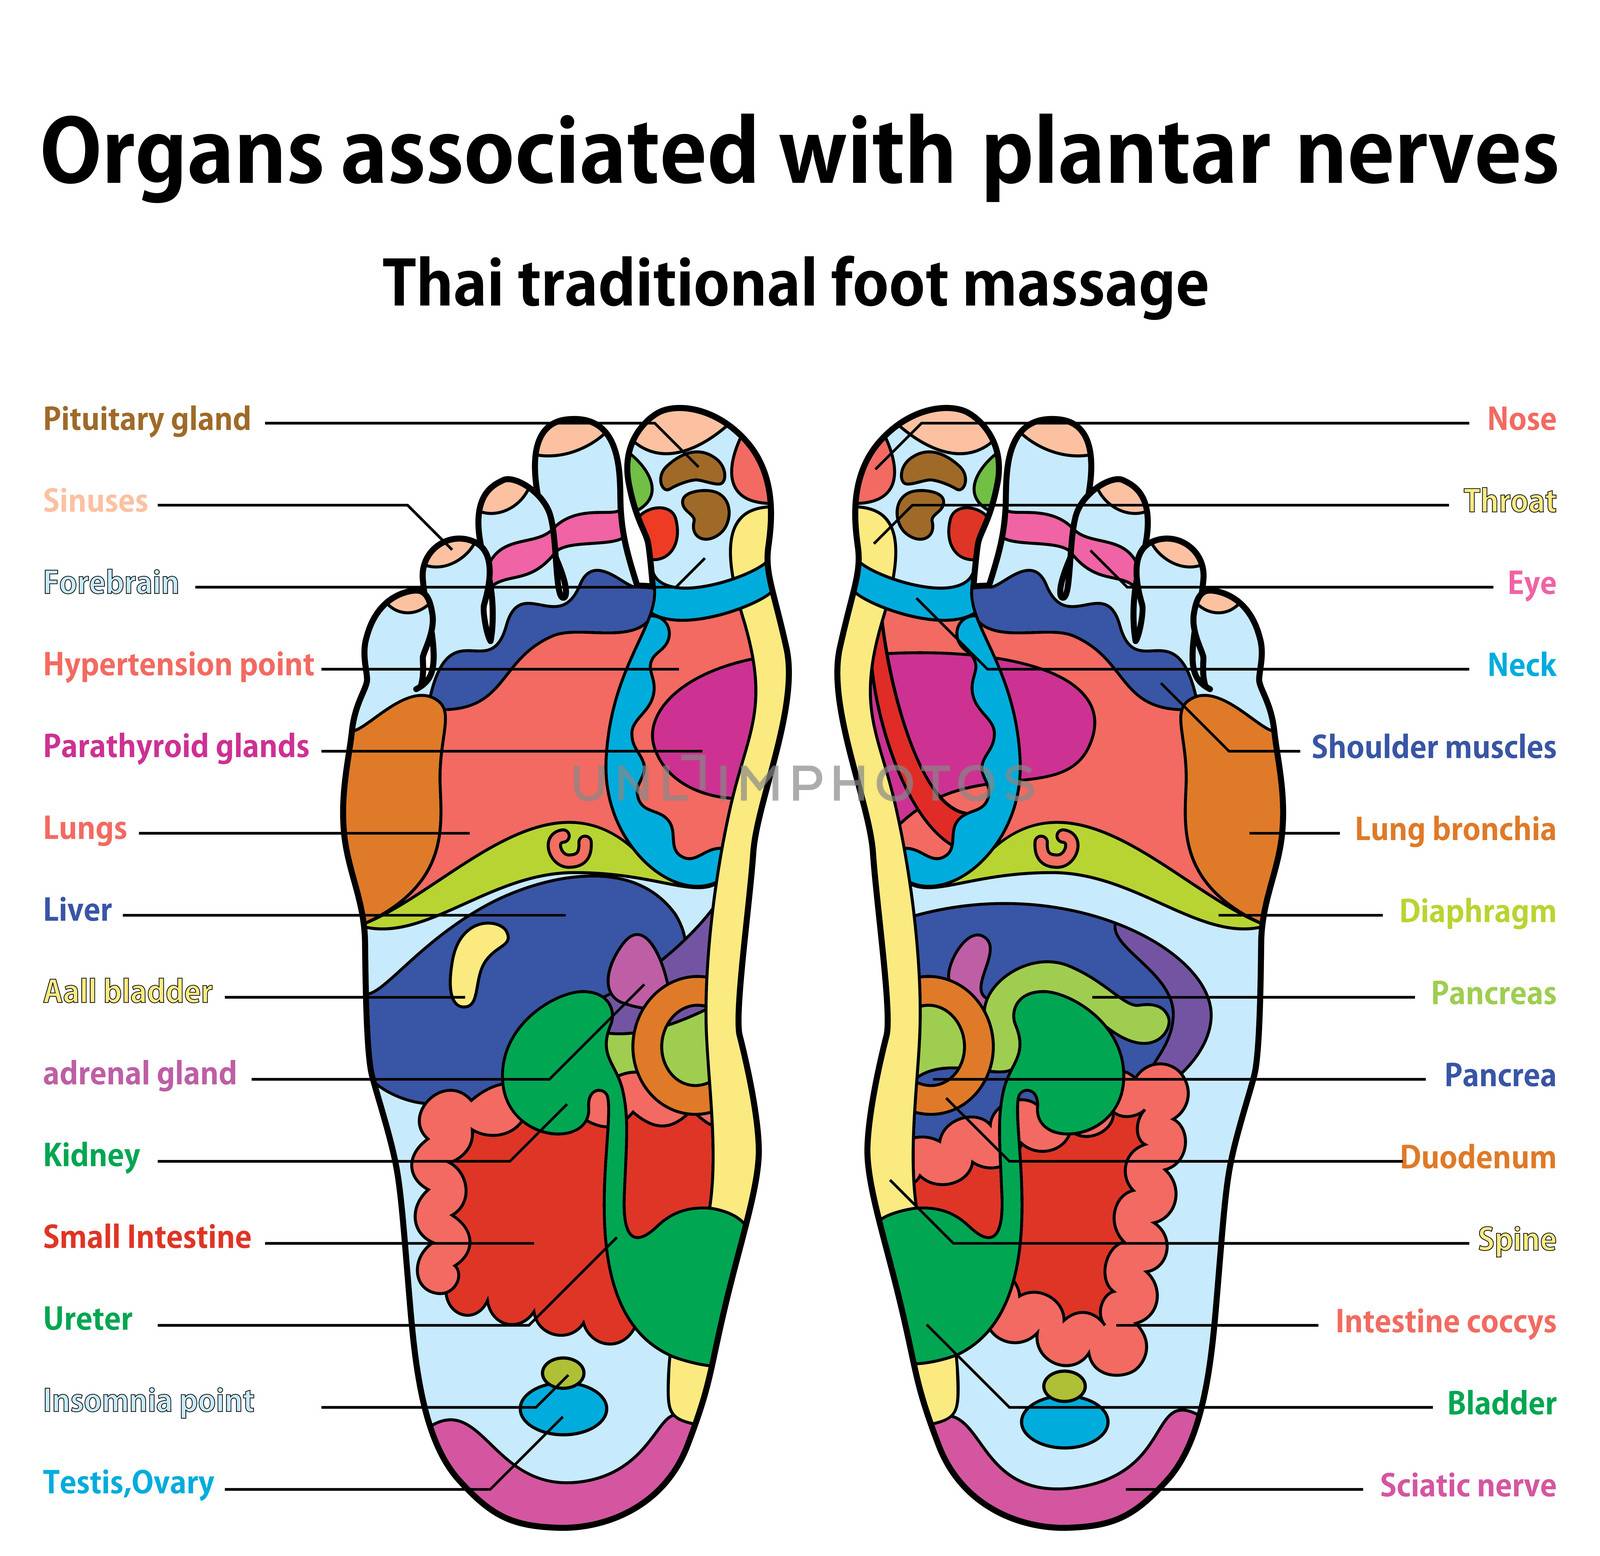 Thai traditional foot massage